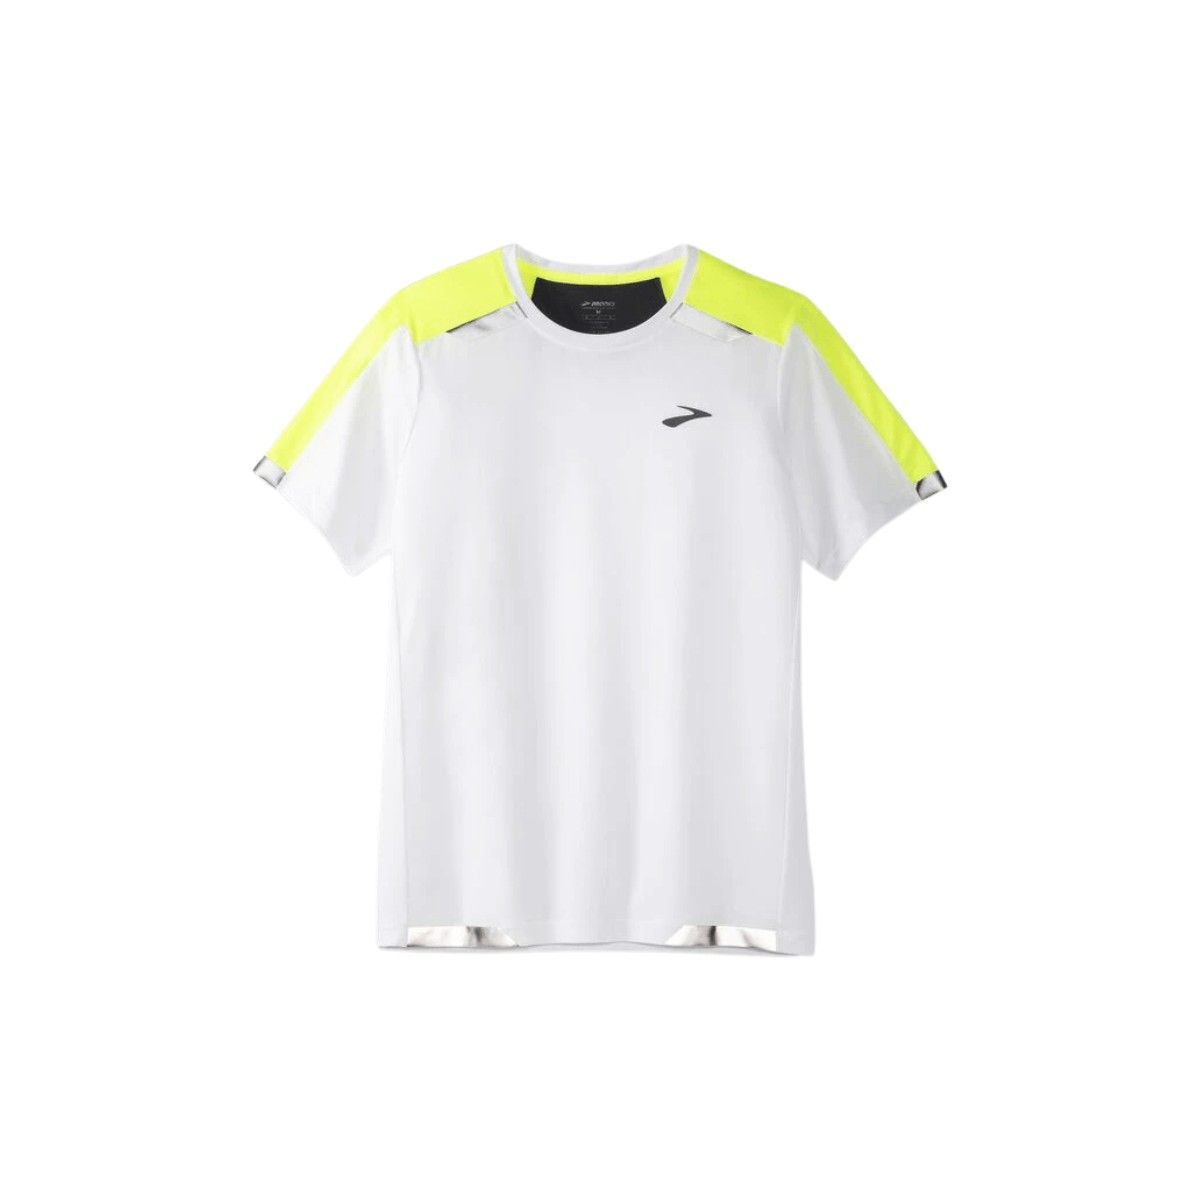 Brooks Run Visible Shirt White, Size XS